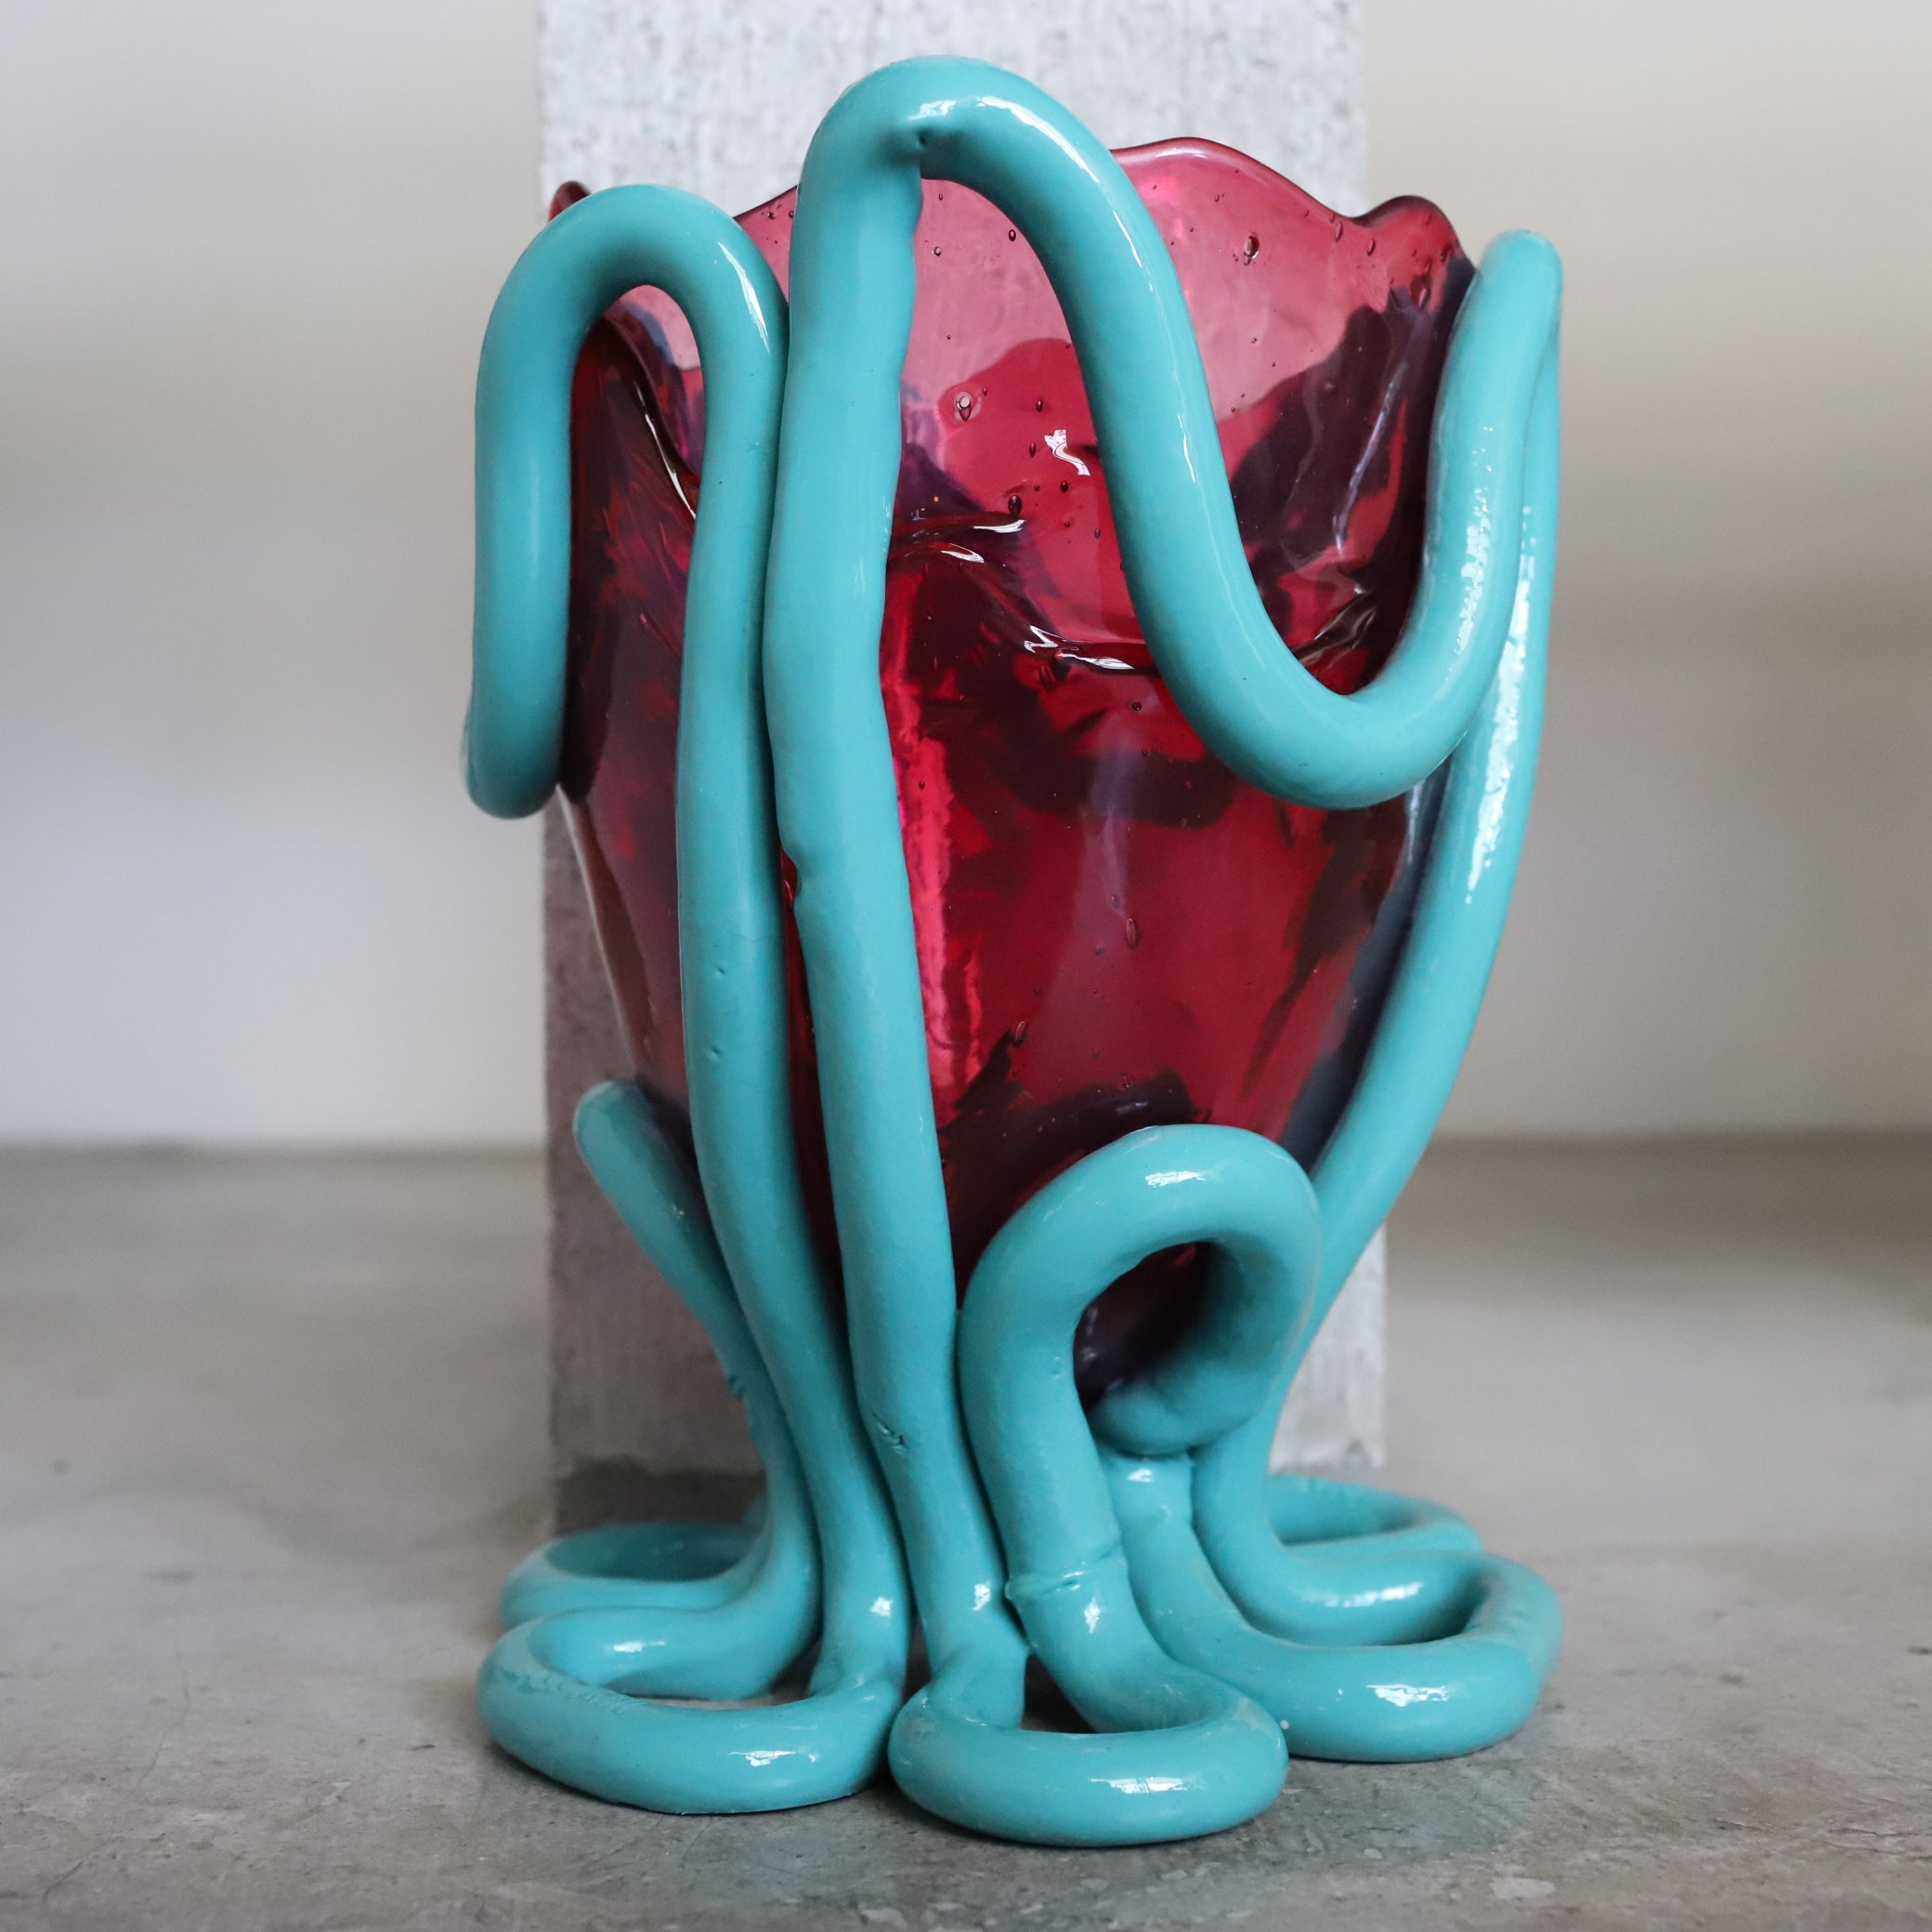 Indian Summer Vase M size - Fish Design by Gaetano Pesce